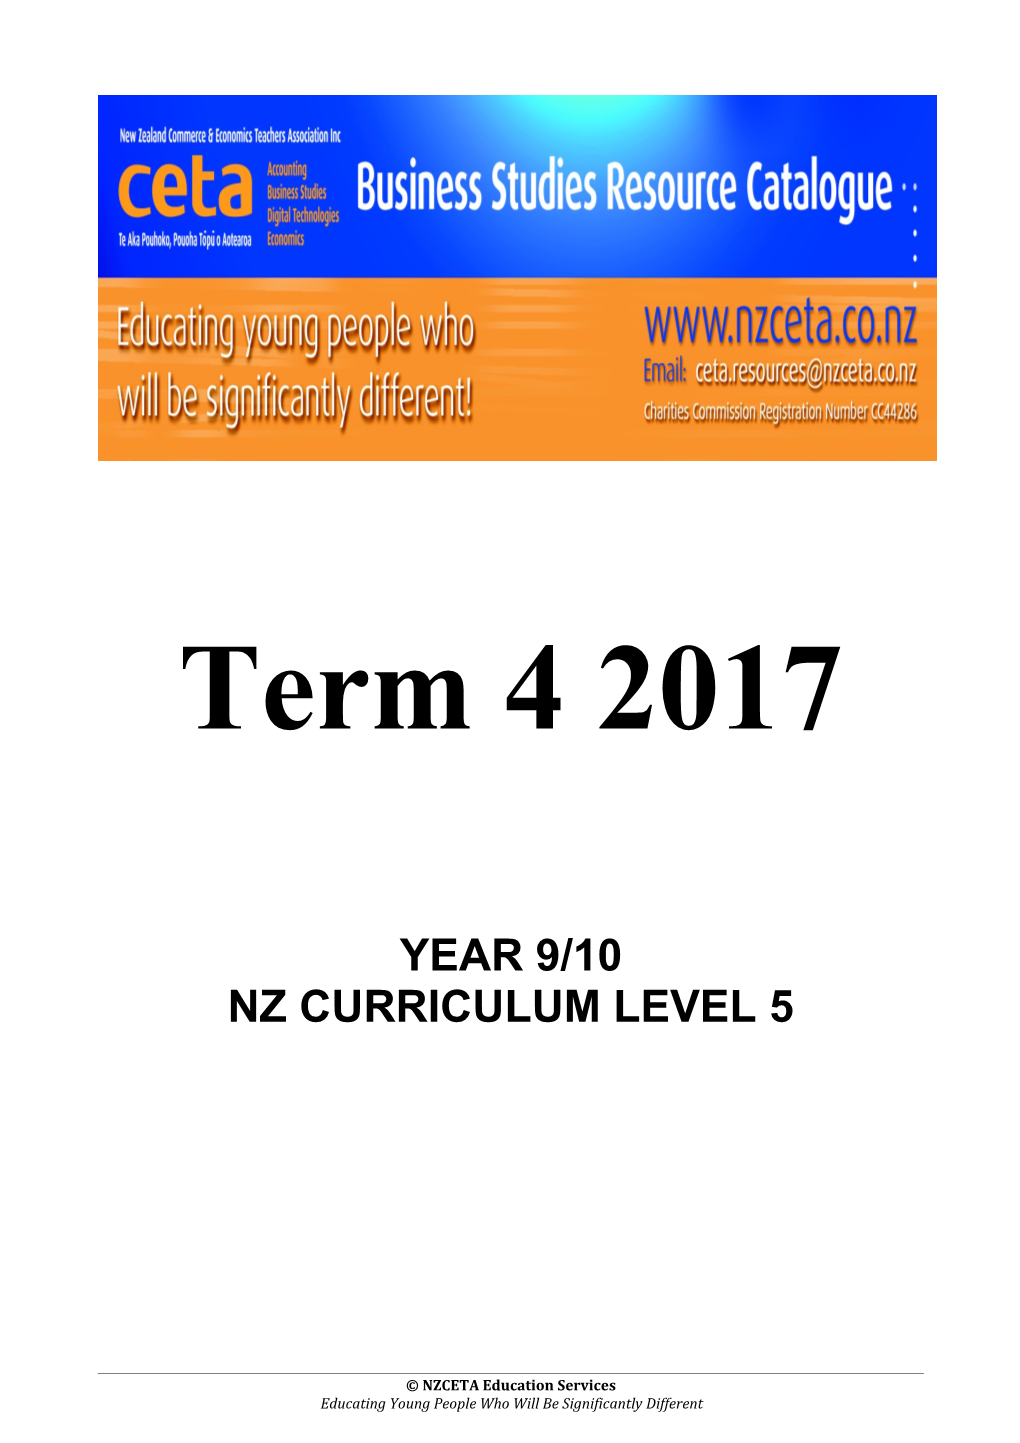 Nz Curriculum Level 5